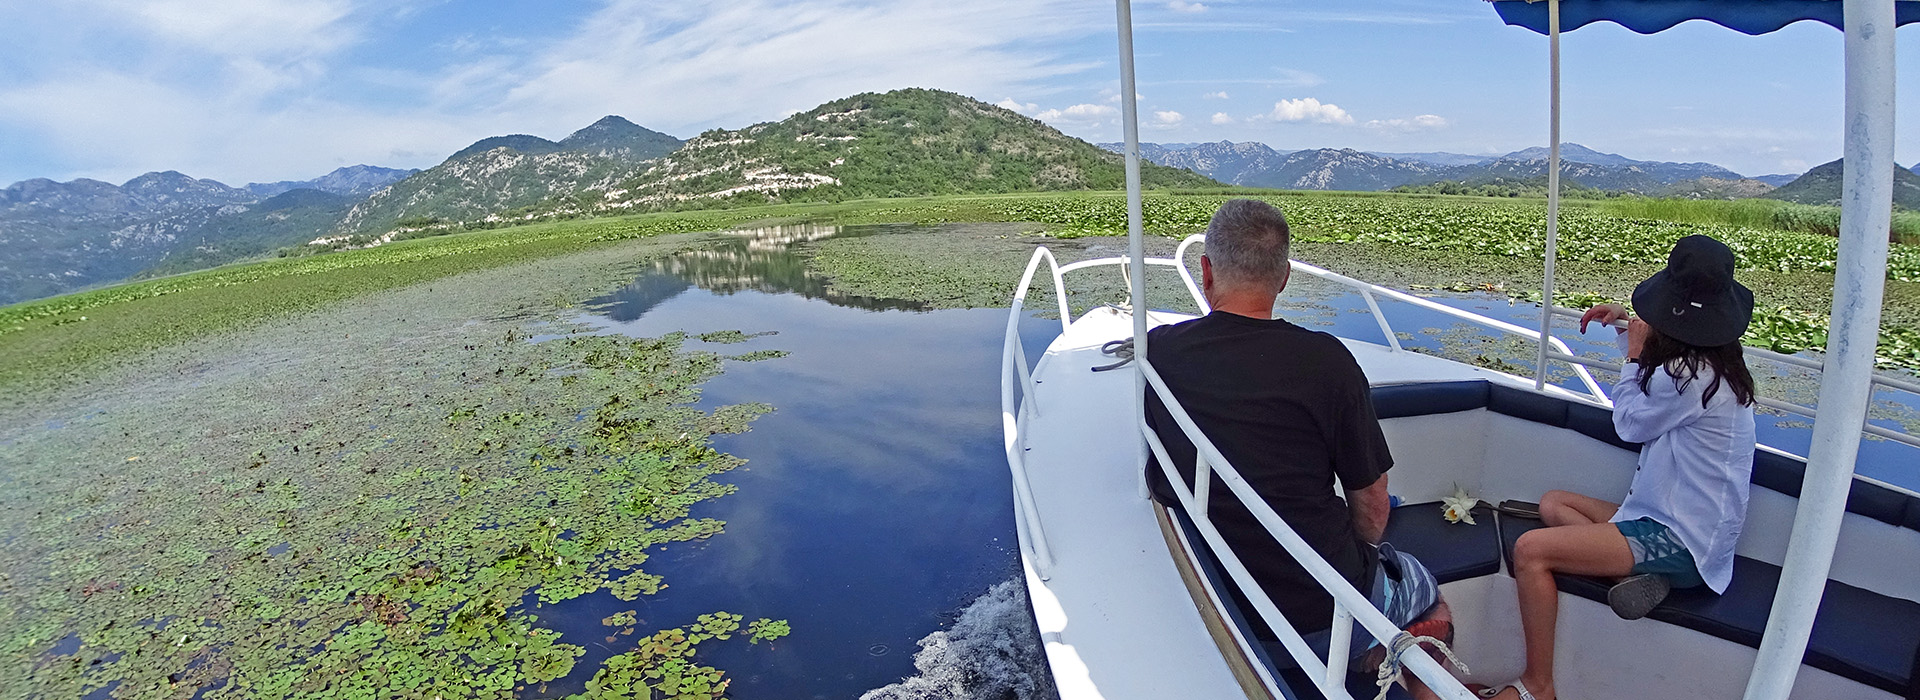 Luxury Family Holiday in Montenegro - Skadar lake boat ride